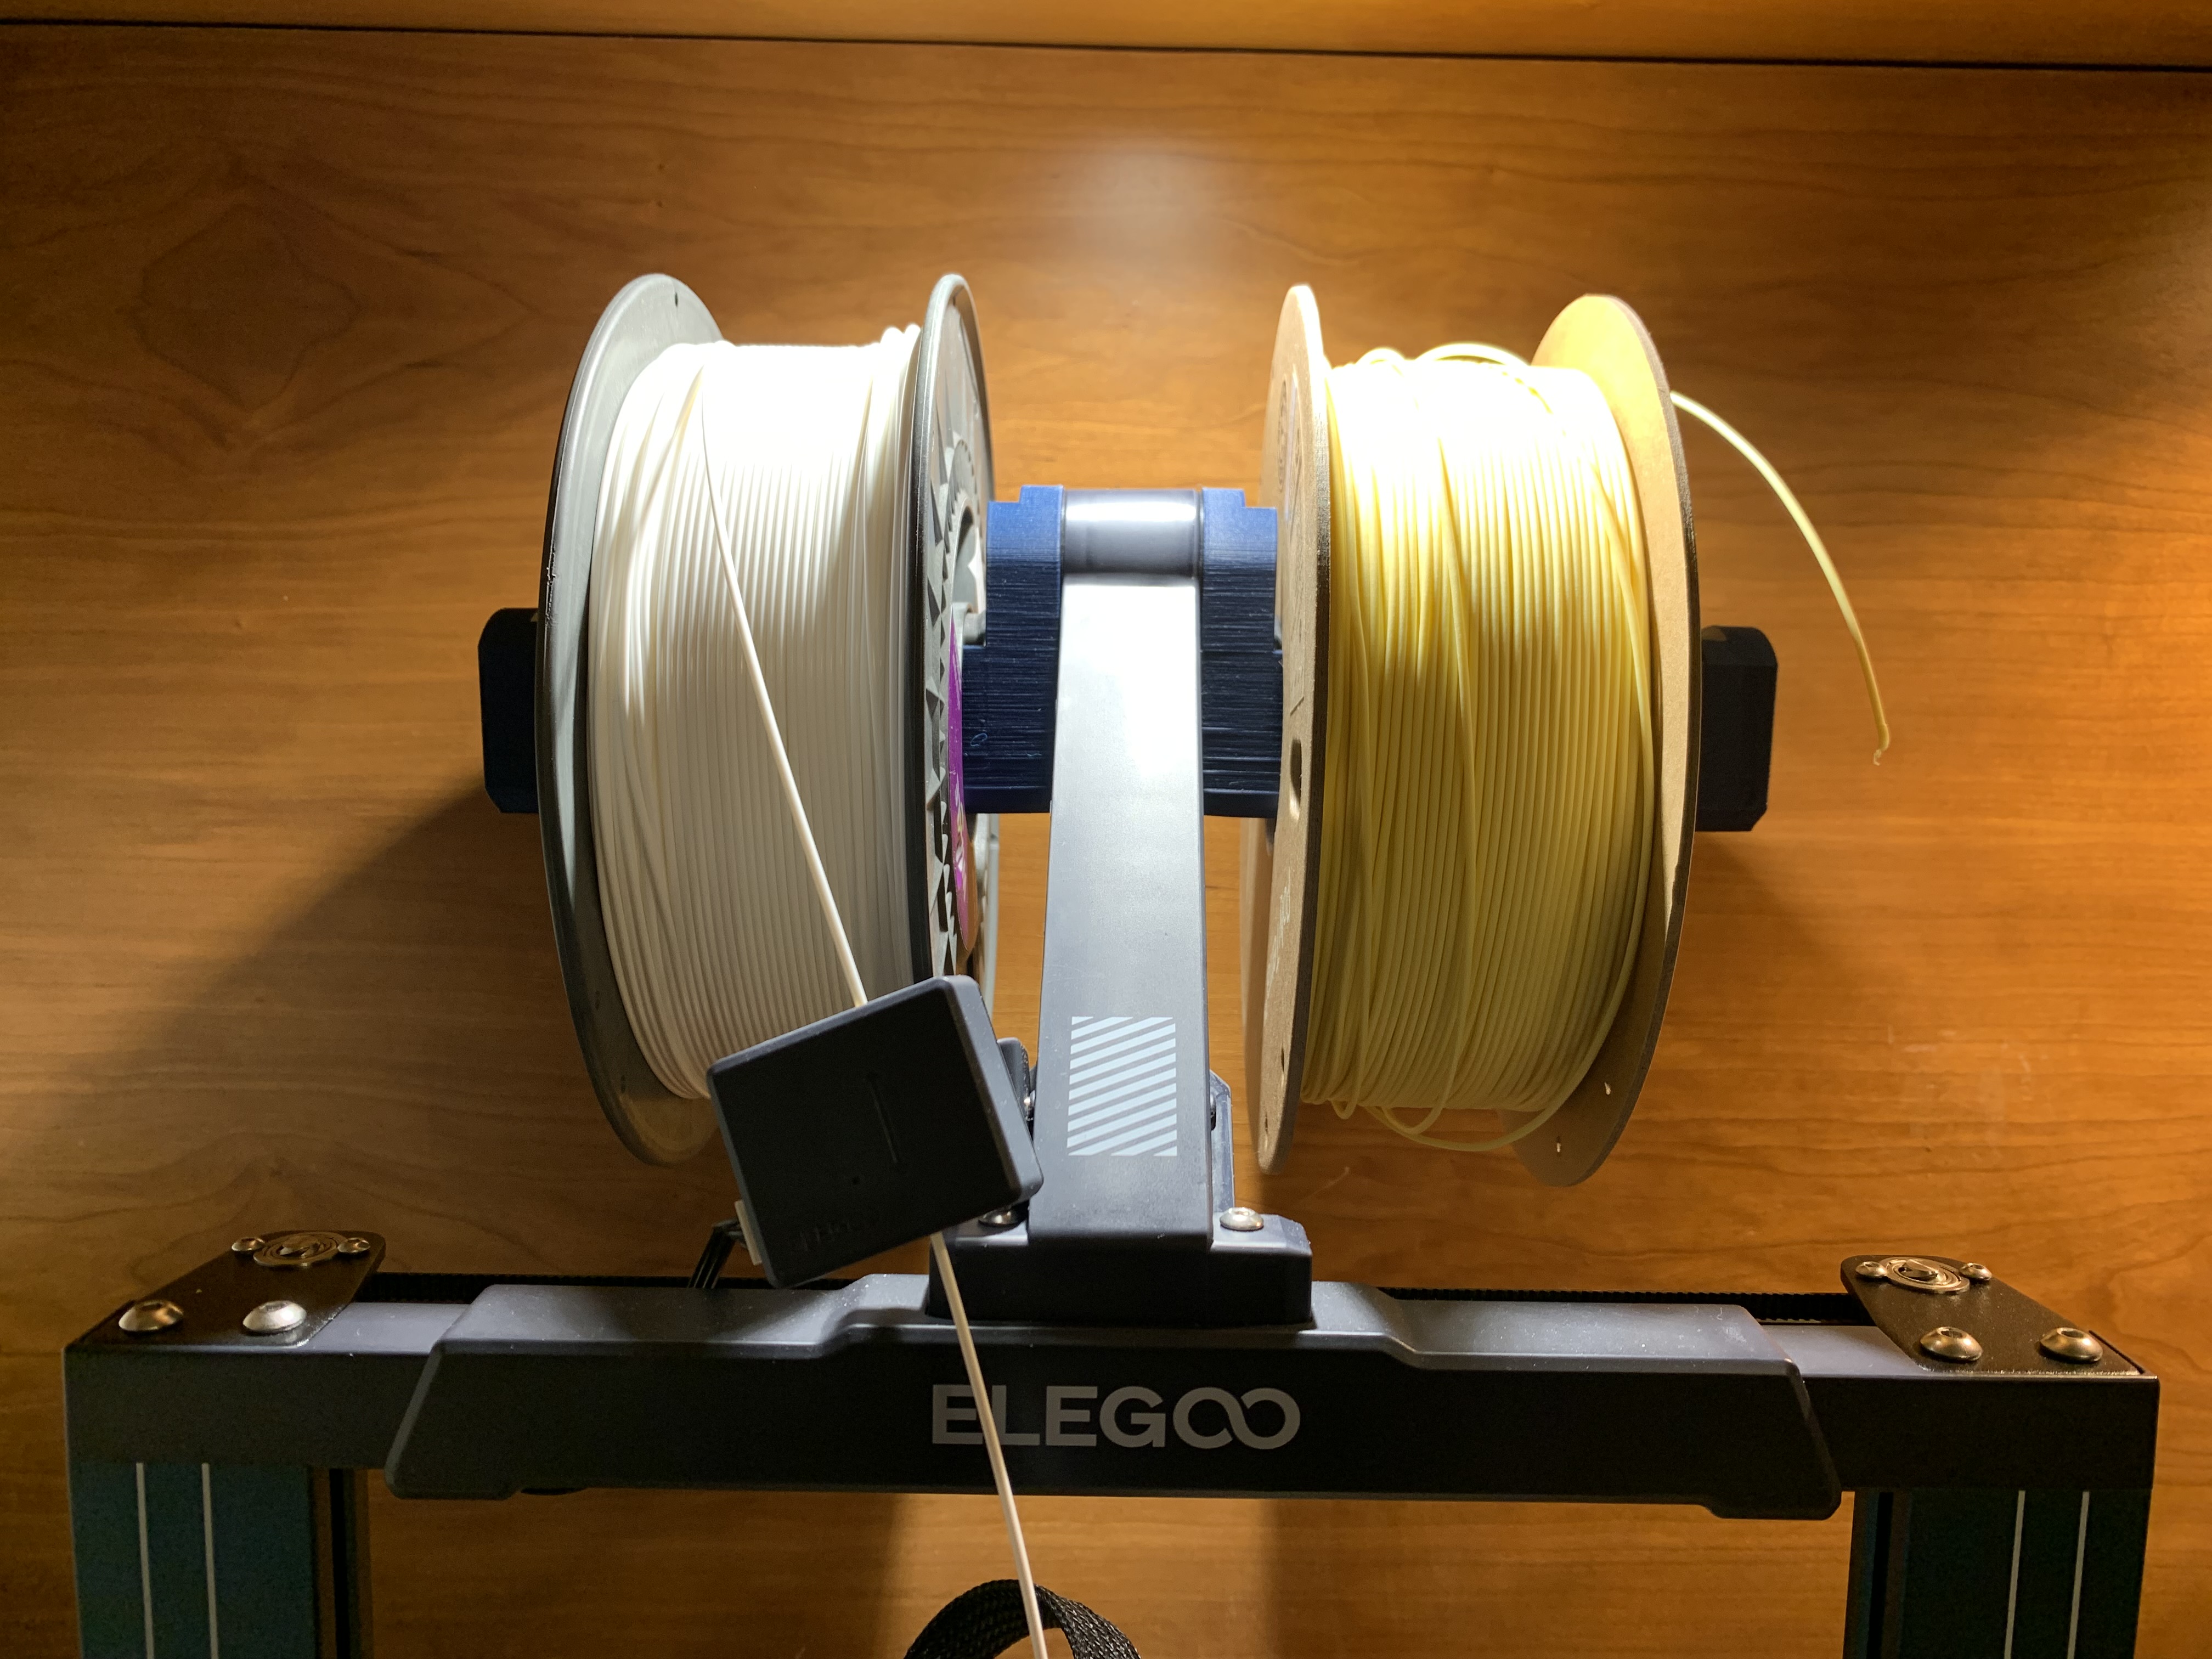 Spool (Filament) Holder for Elegoo Neptune 3 Pro / Plus / Max par